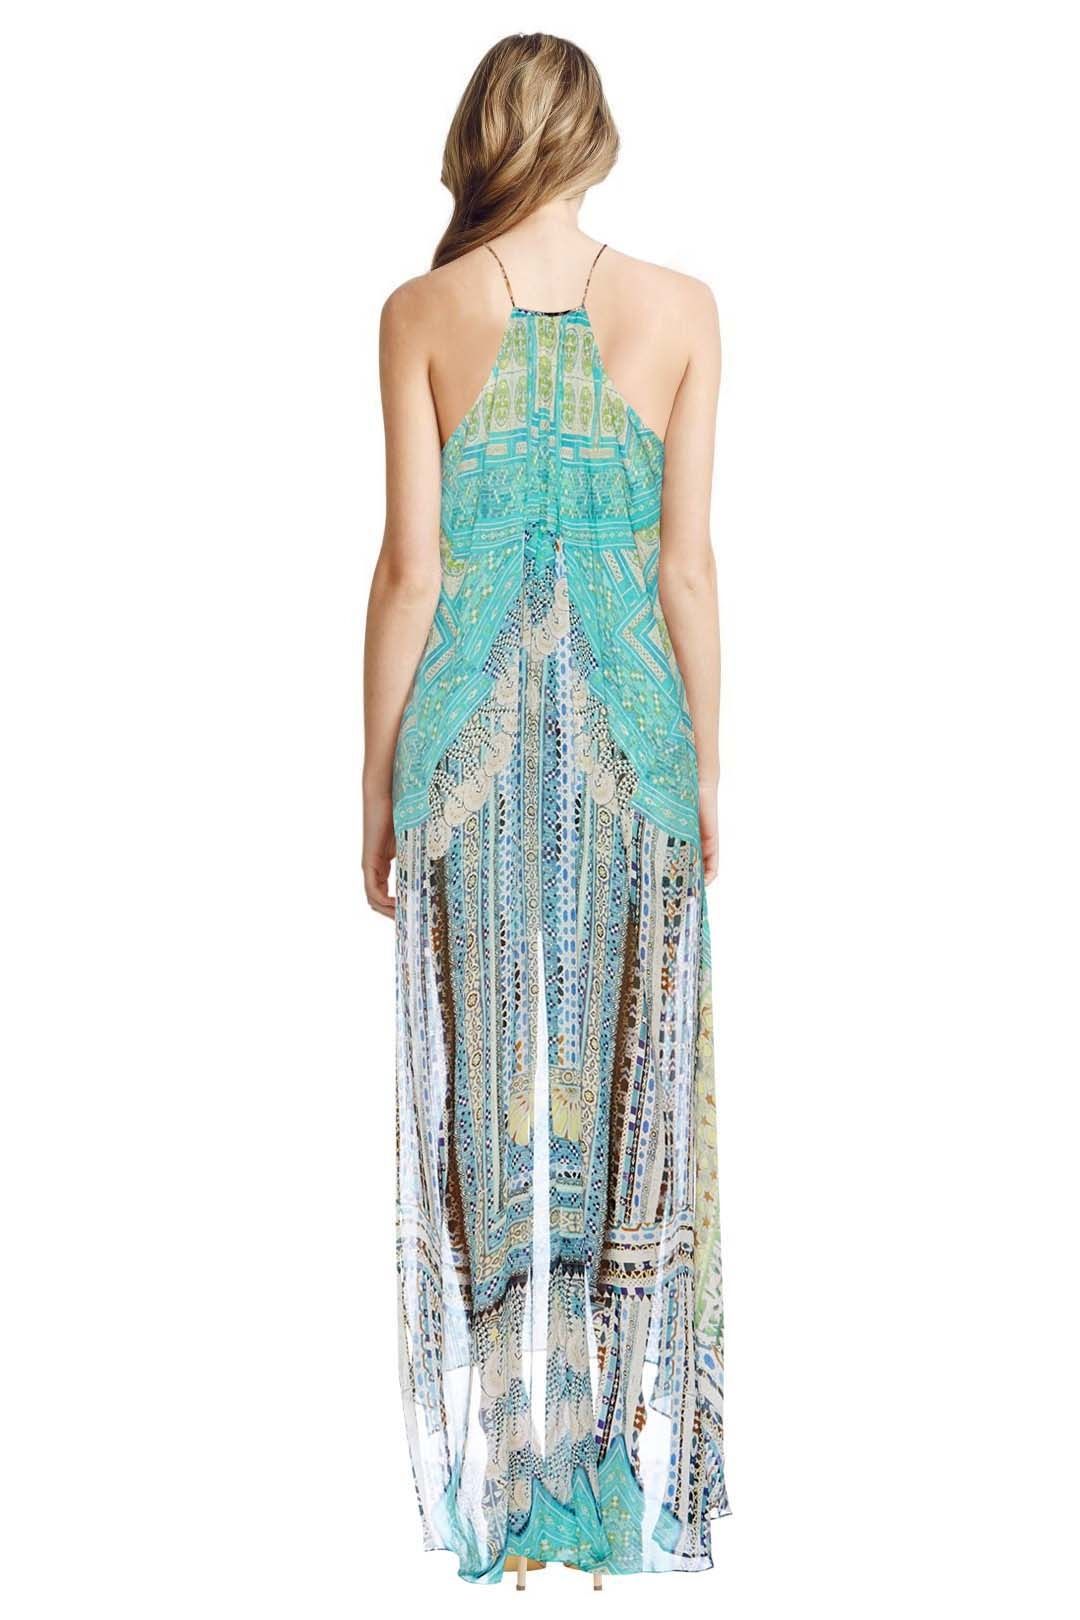 Camilla - Topkapi Thread Sheer Overlay Dress - Prints - Back 